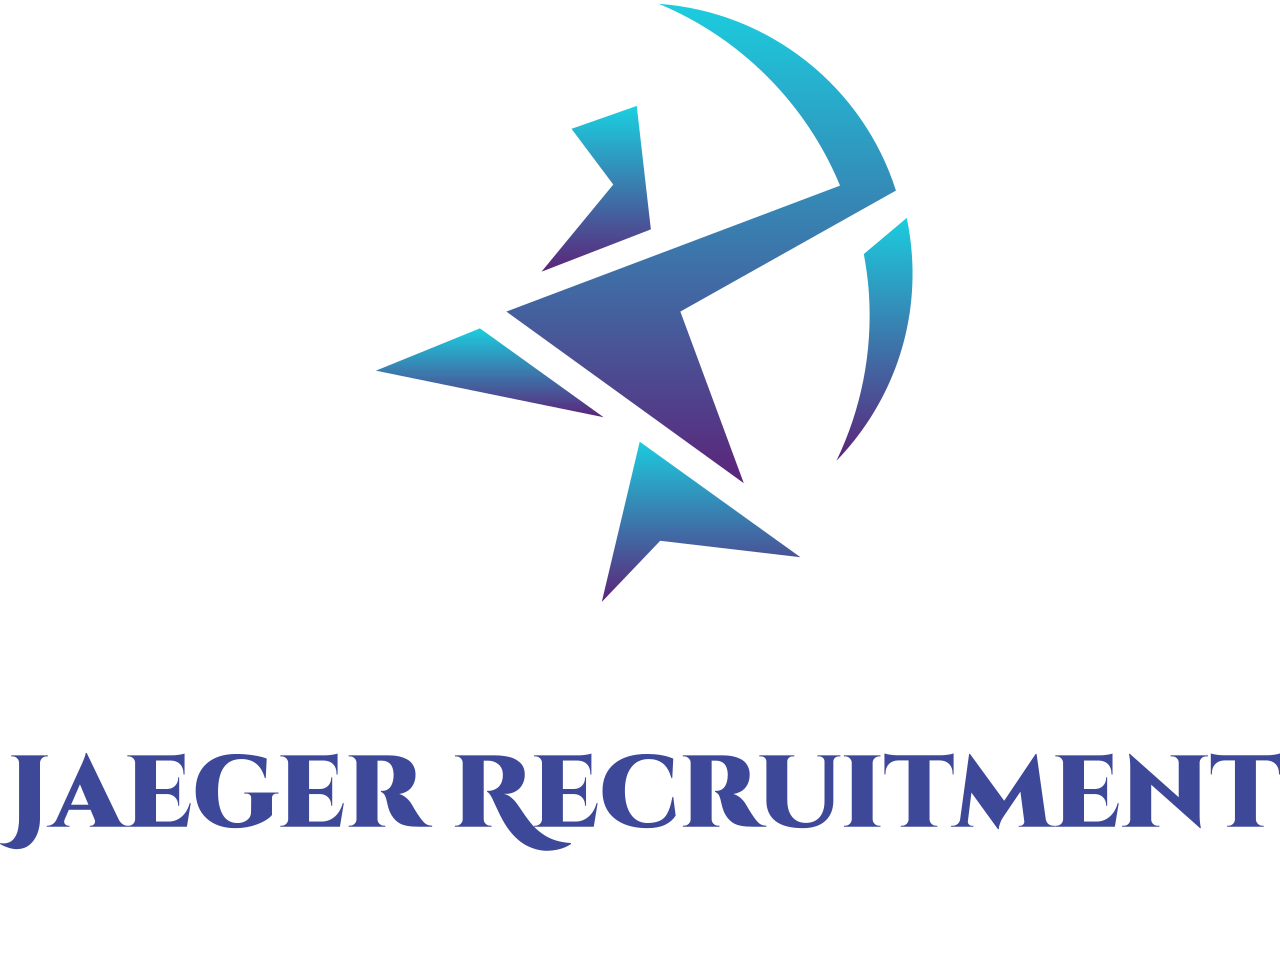 Jaeger Recruitment's logo